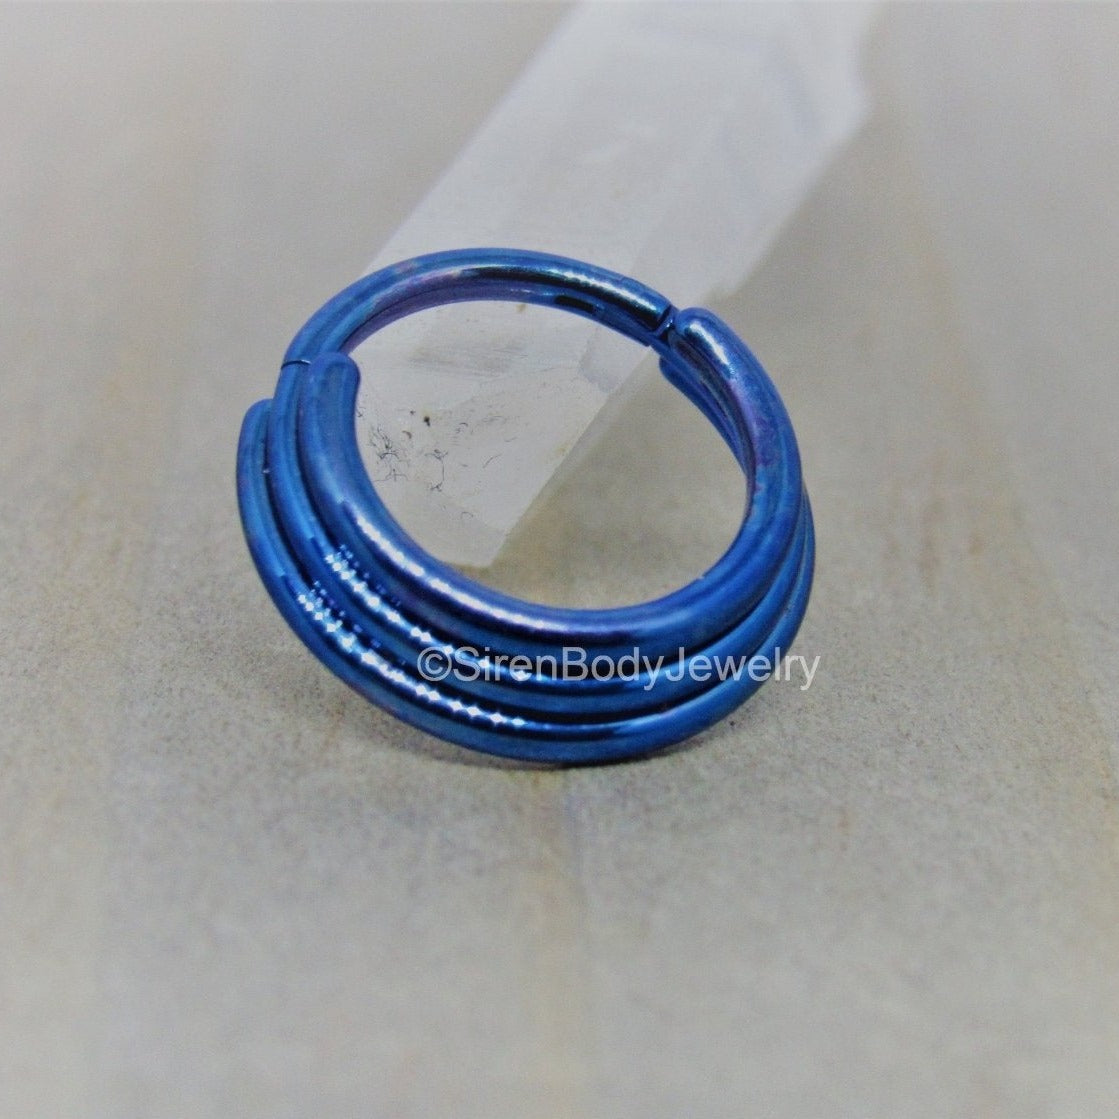 16g titanium triple stack hinged segment ring anodized blue daith septum cartilage hoop earring